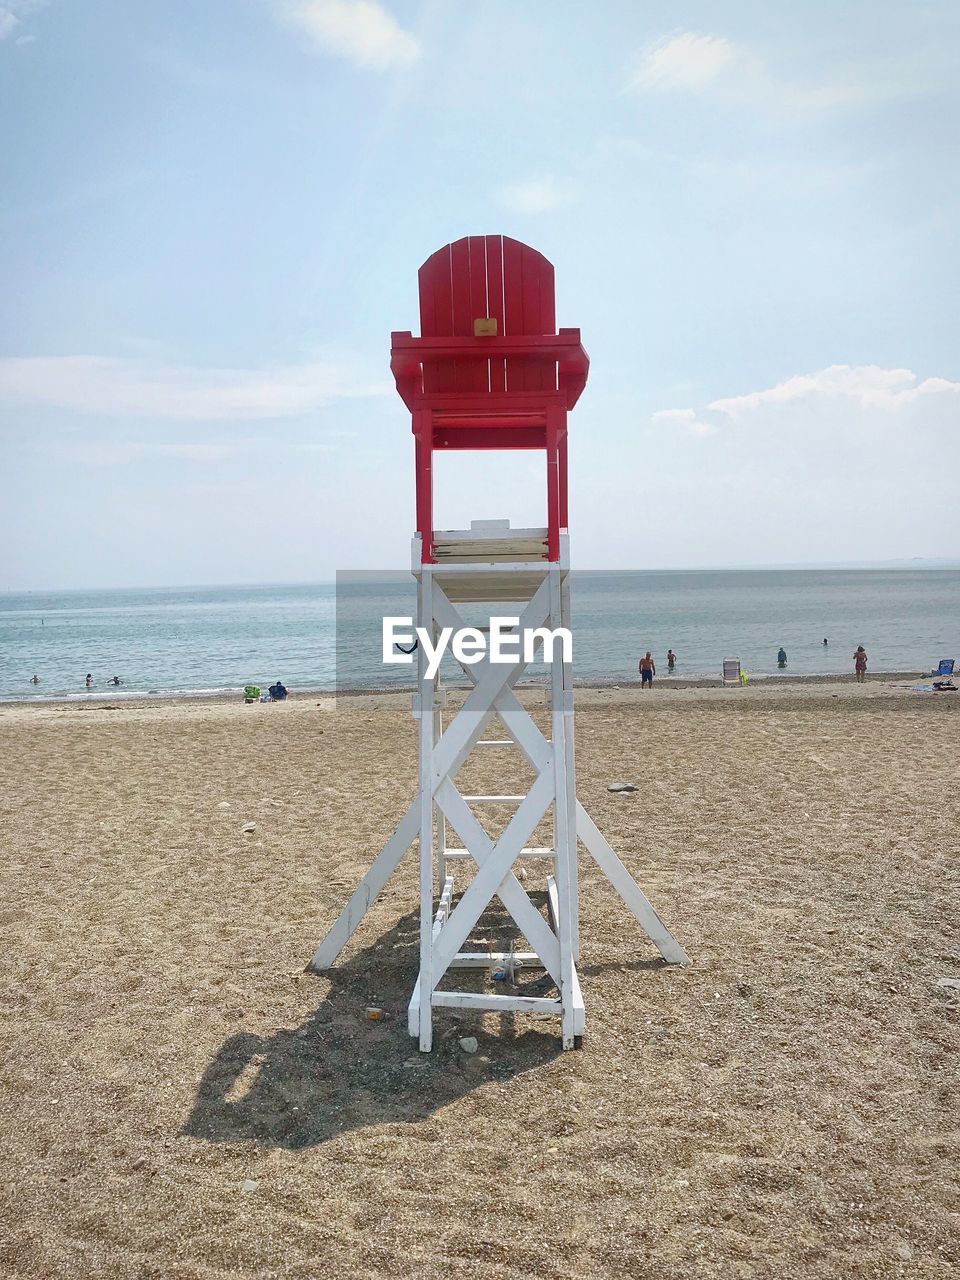 Lifeguard chair at beach against sky